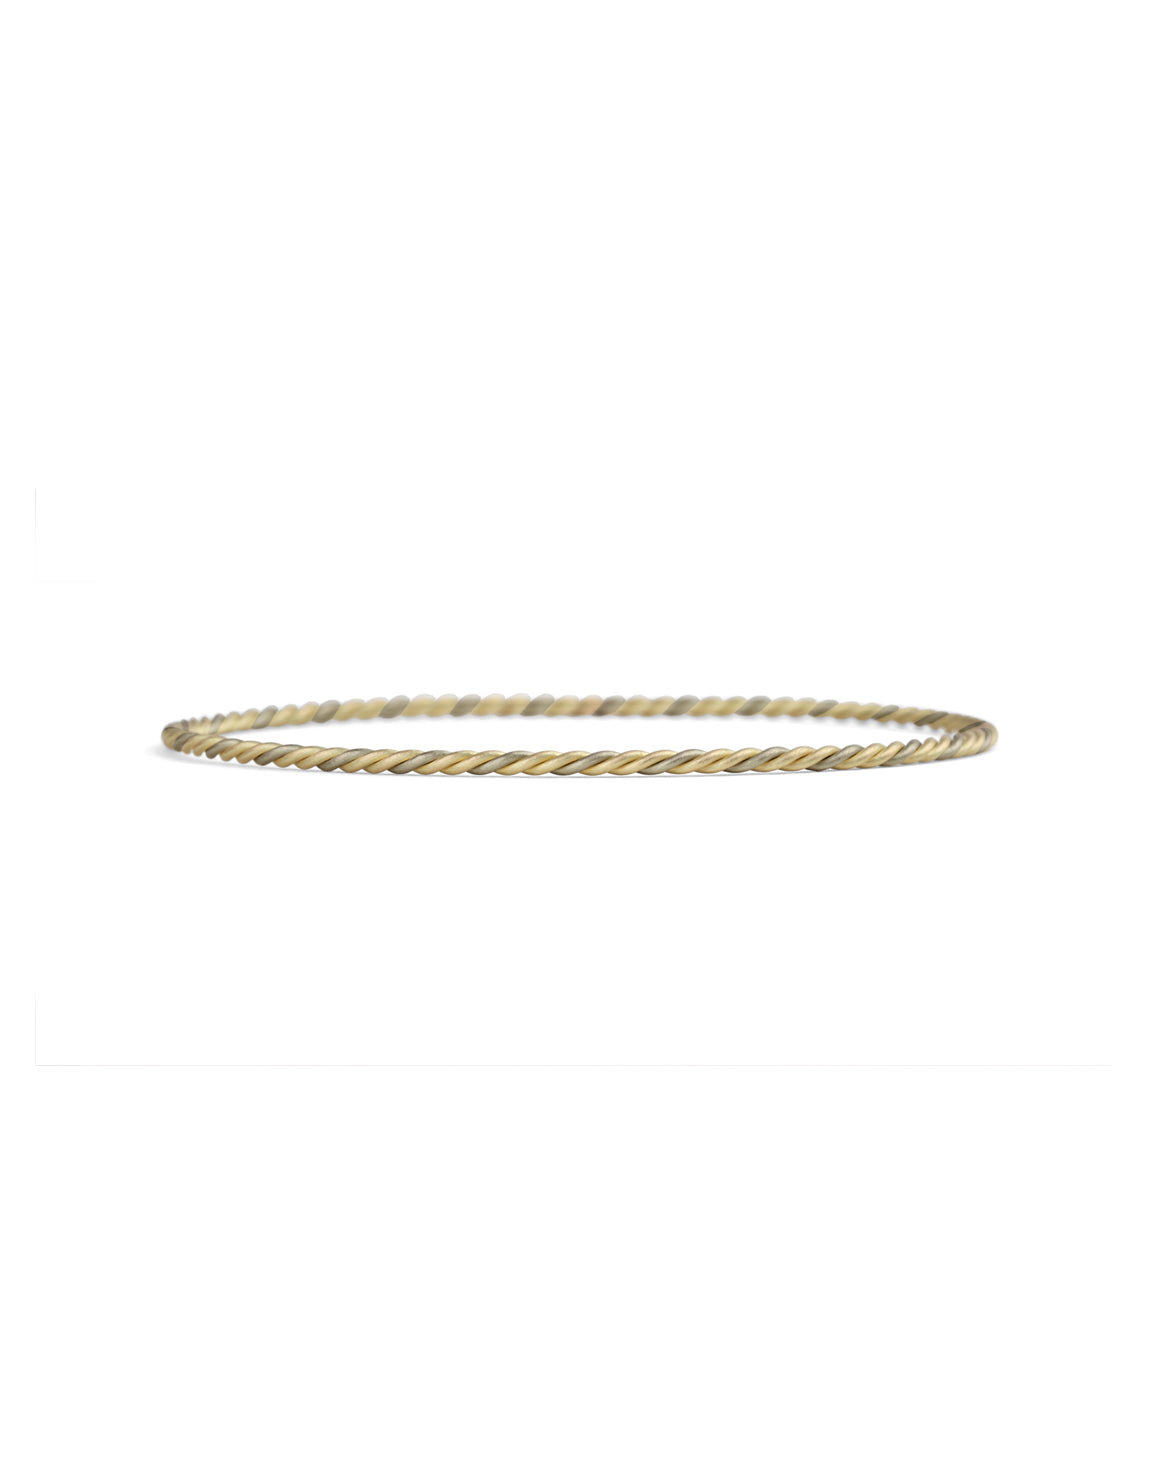 Three Strand Rope Bangle - Multi Gold - Extra Fine